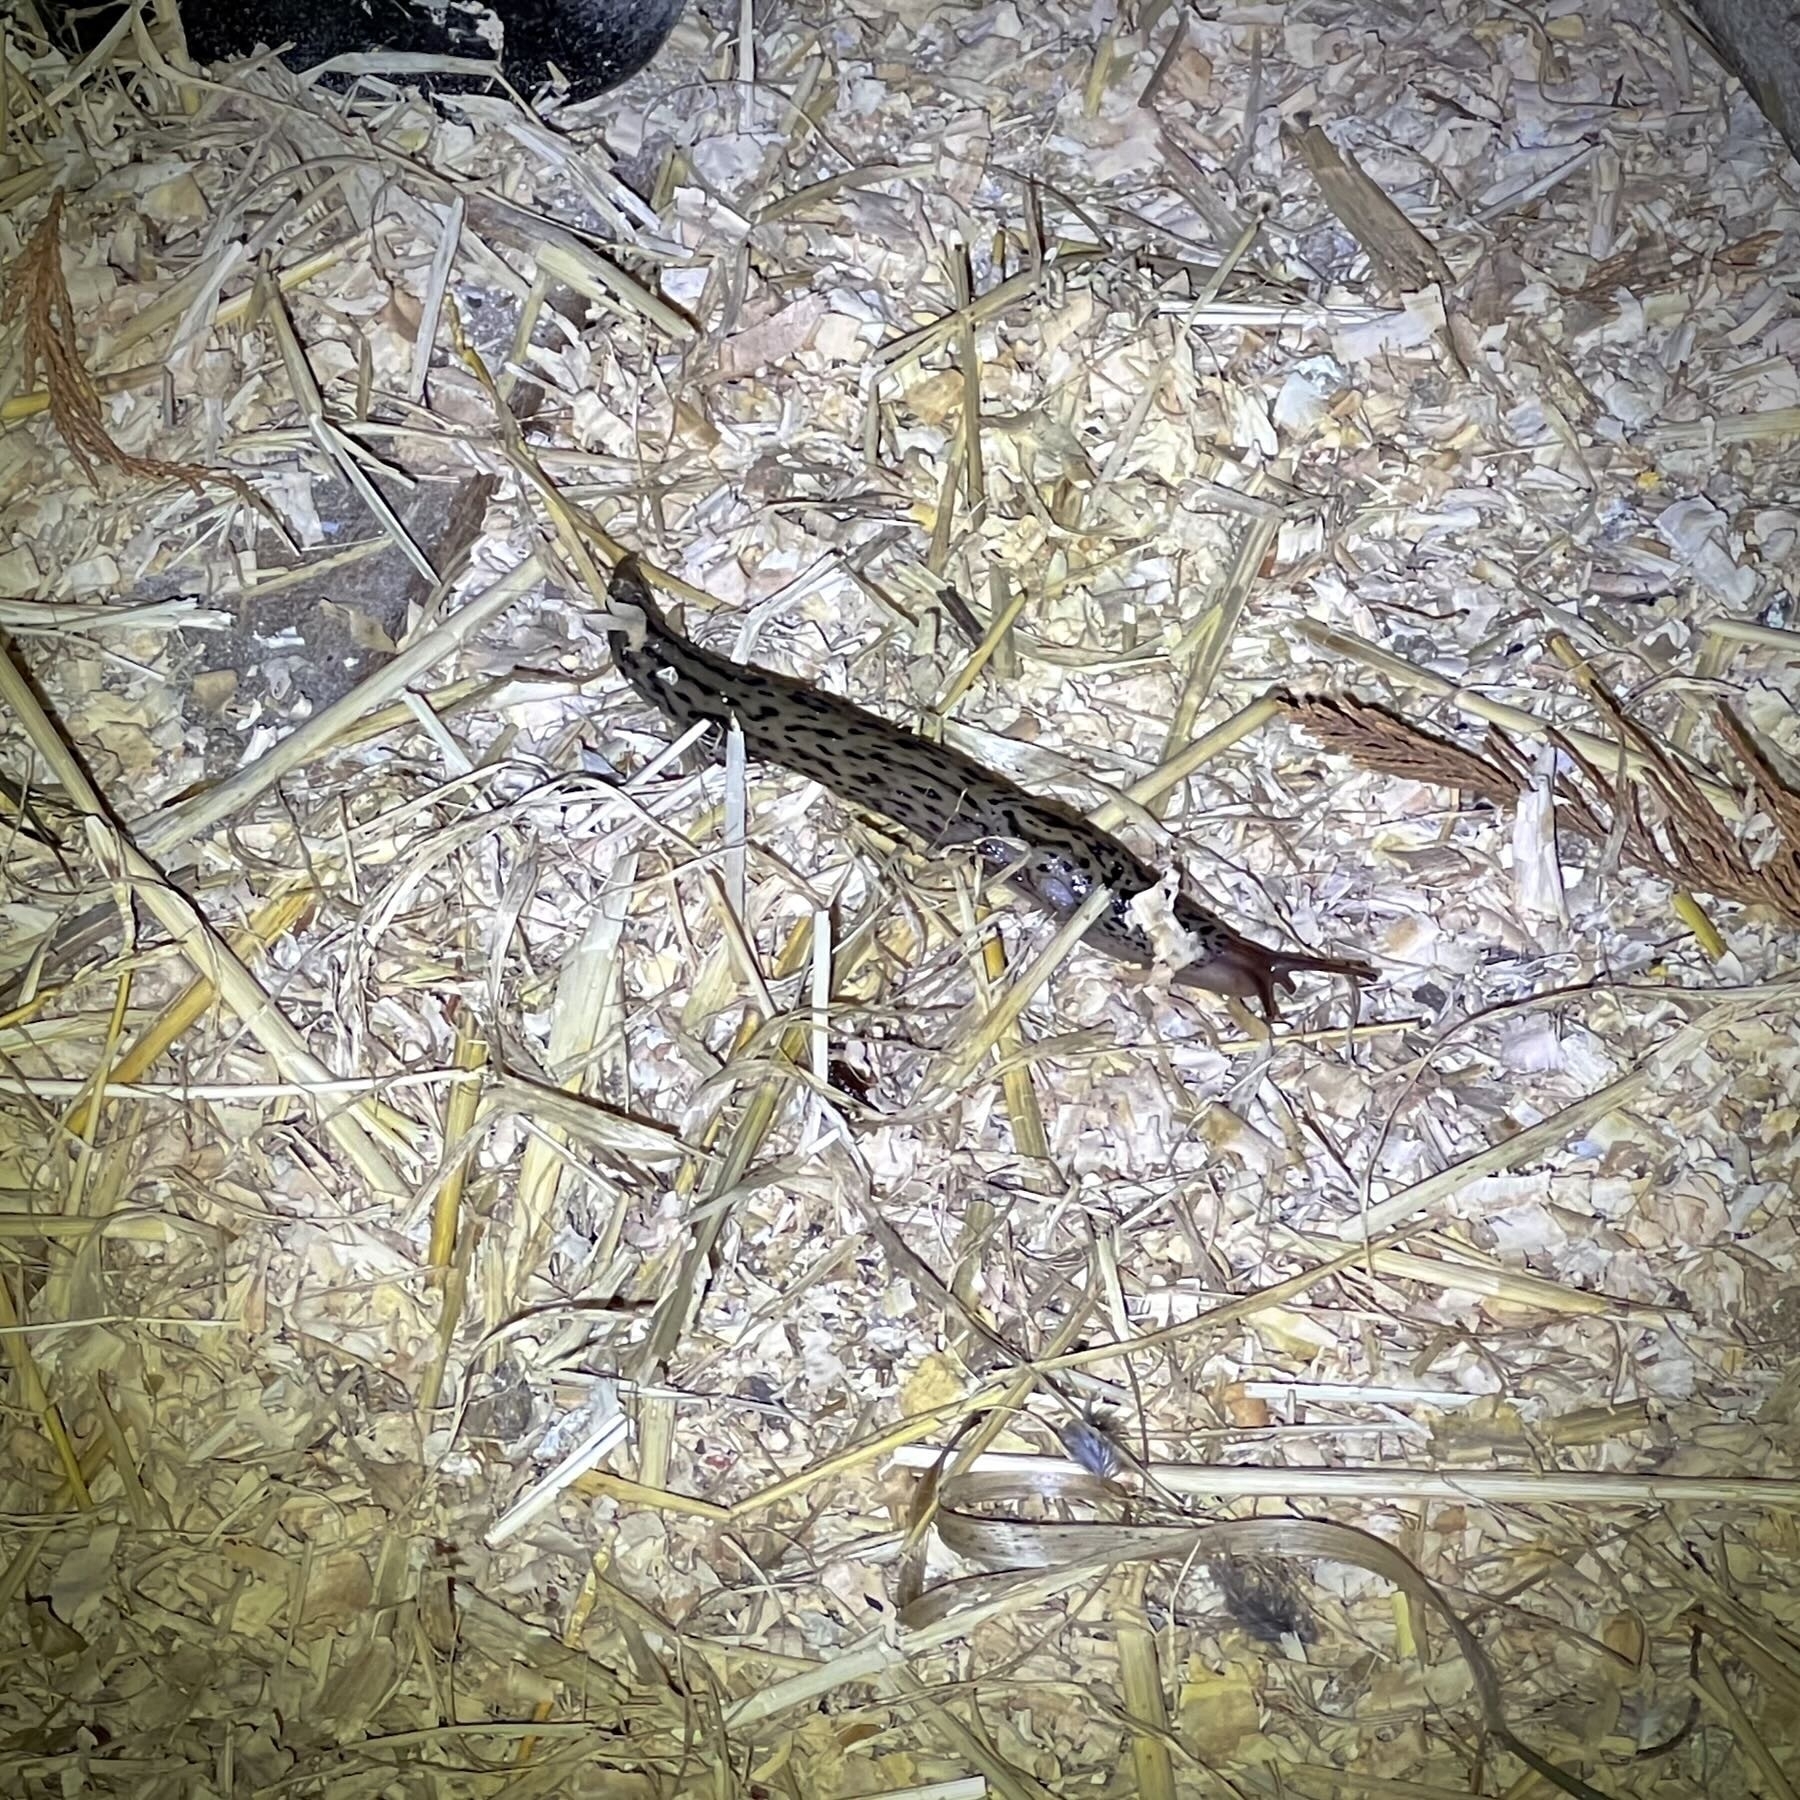 Leopard Slug - Limax Maximus on straw in torchlight. 